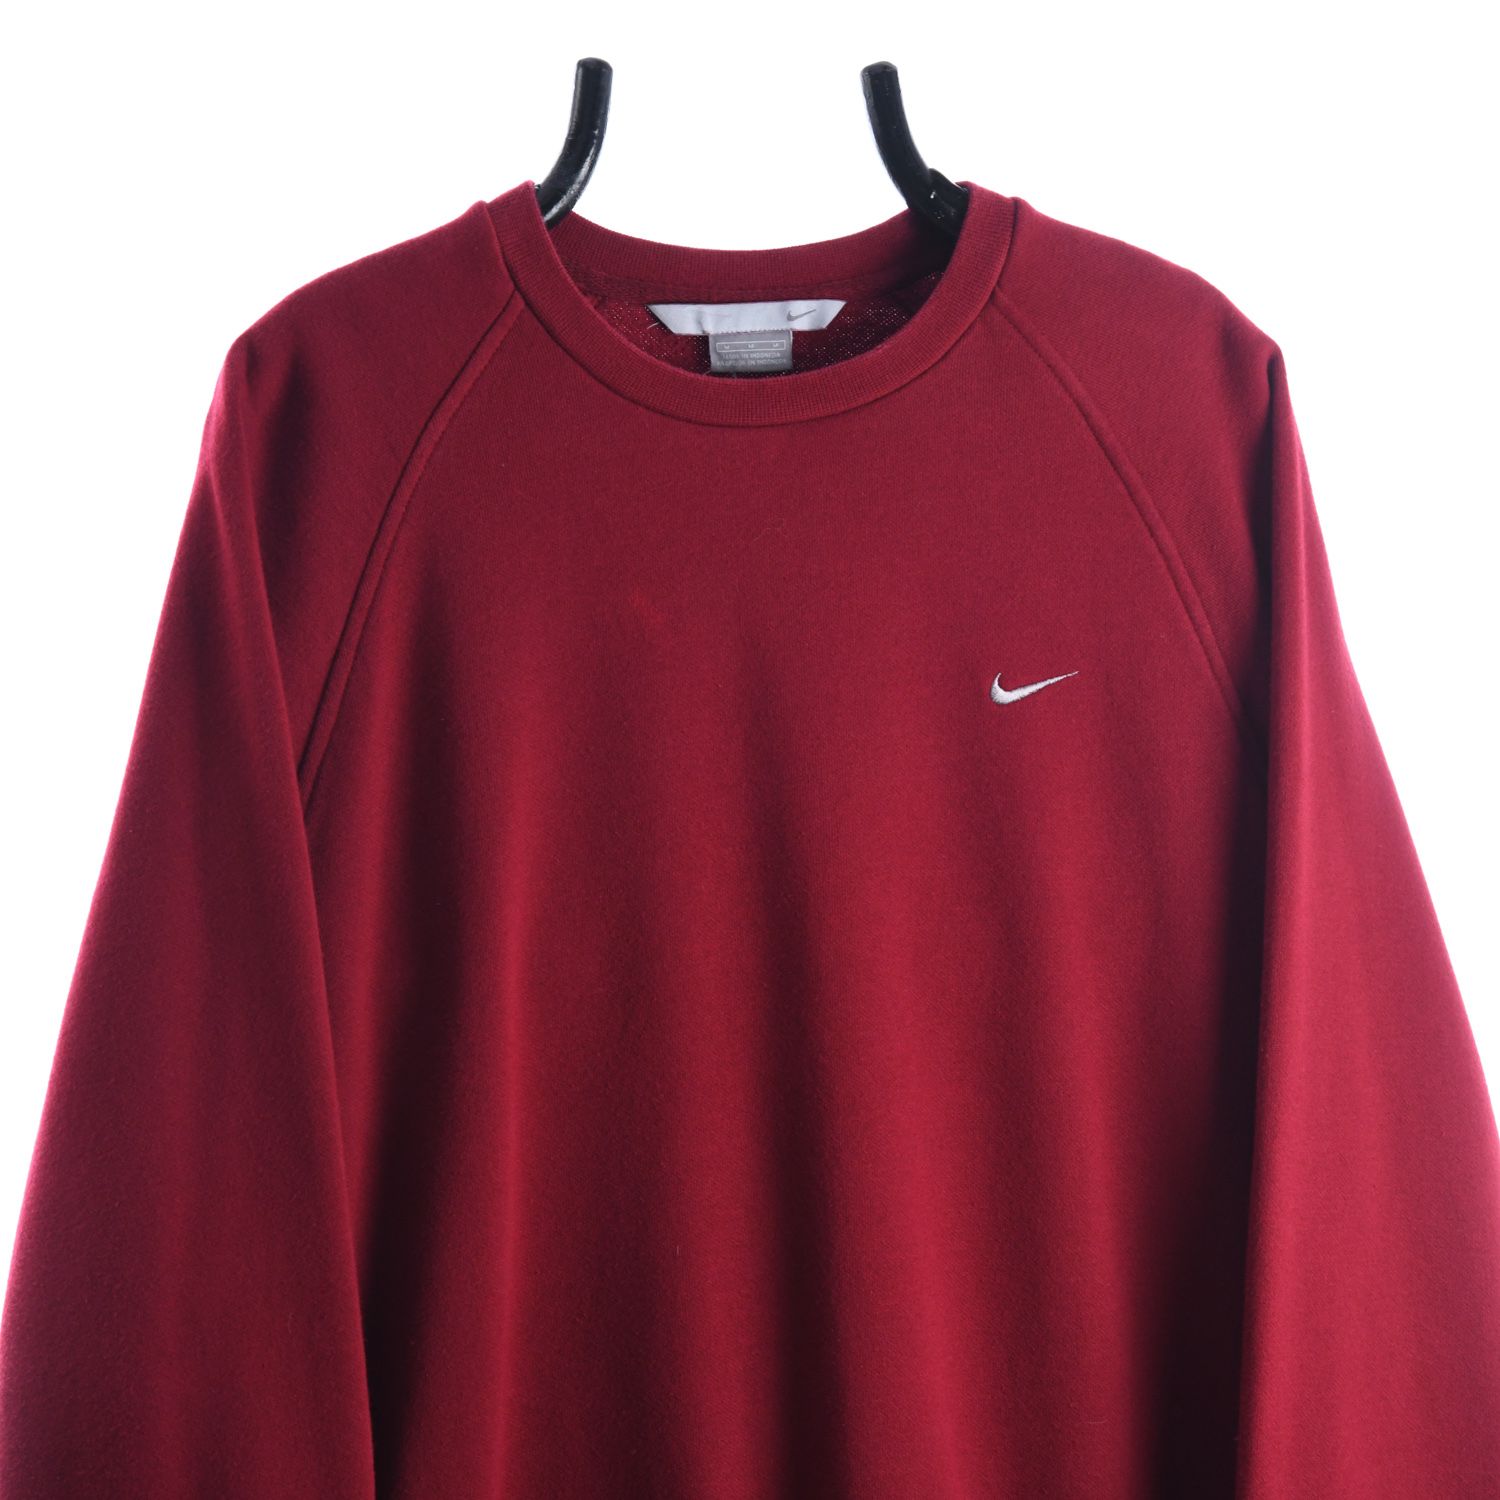 Nike Early 2000s Maroon Sweatshirt